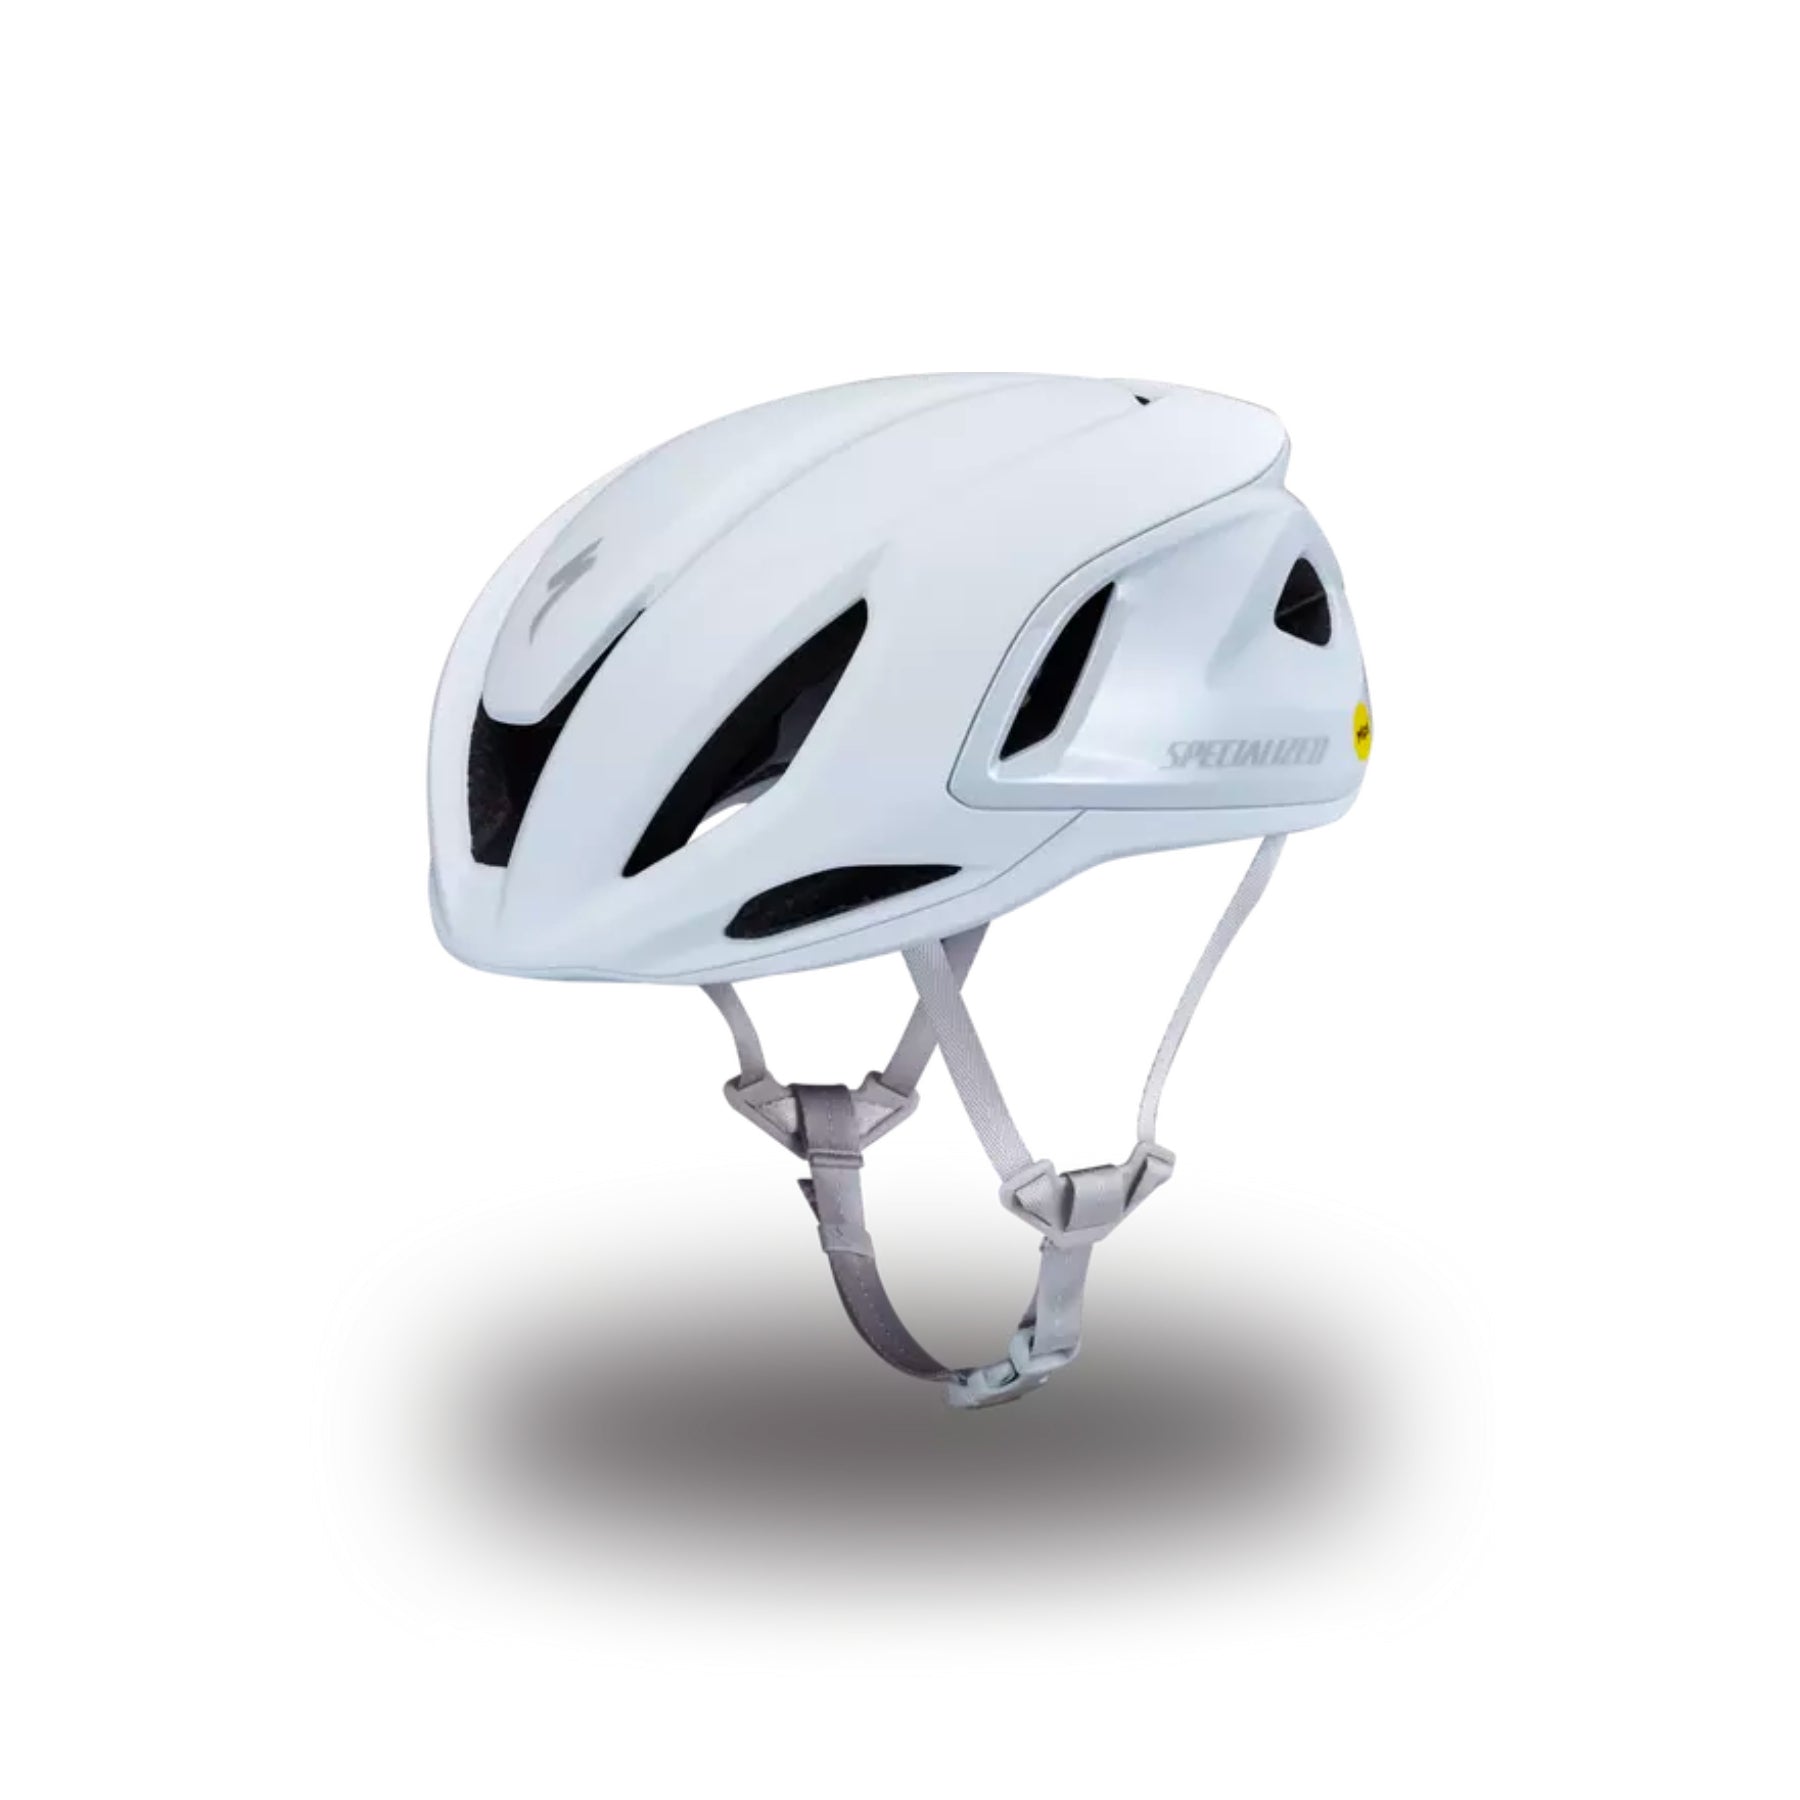 Helmet Specialized Propero 4 White